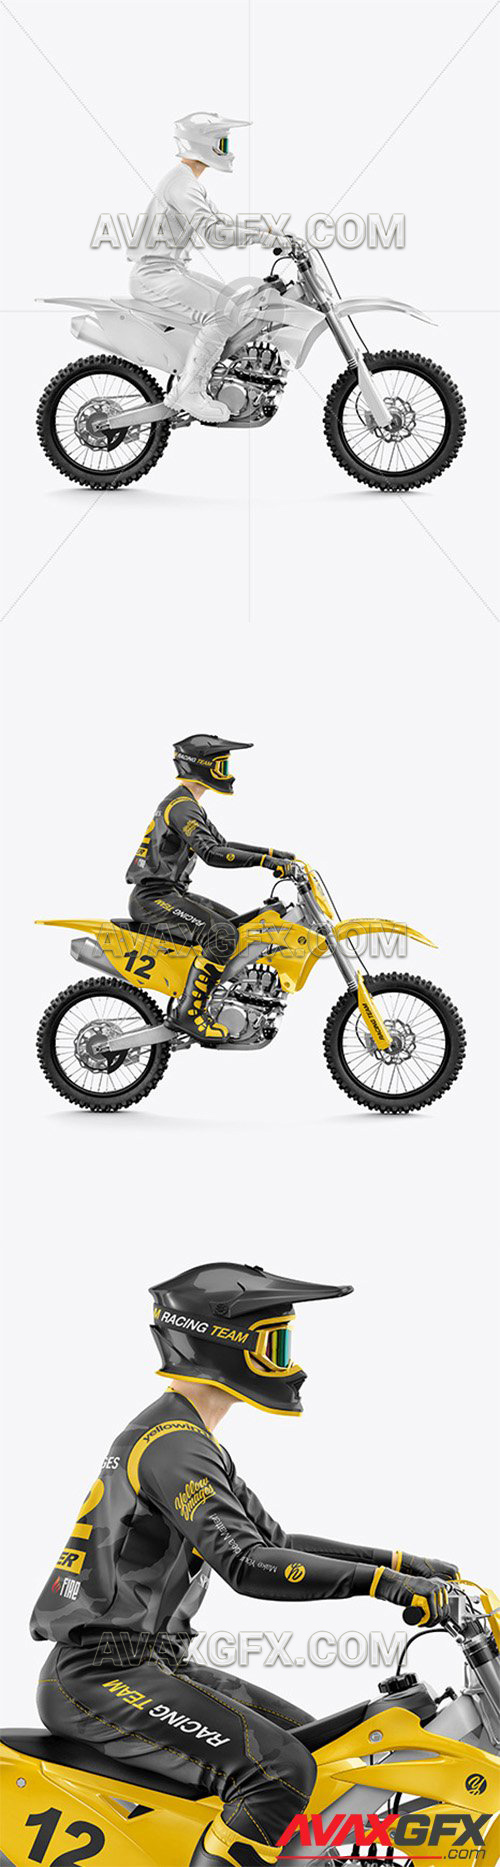 Download Motocross Racing Kit Mockup 58035 » AVAXGFX - All ...